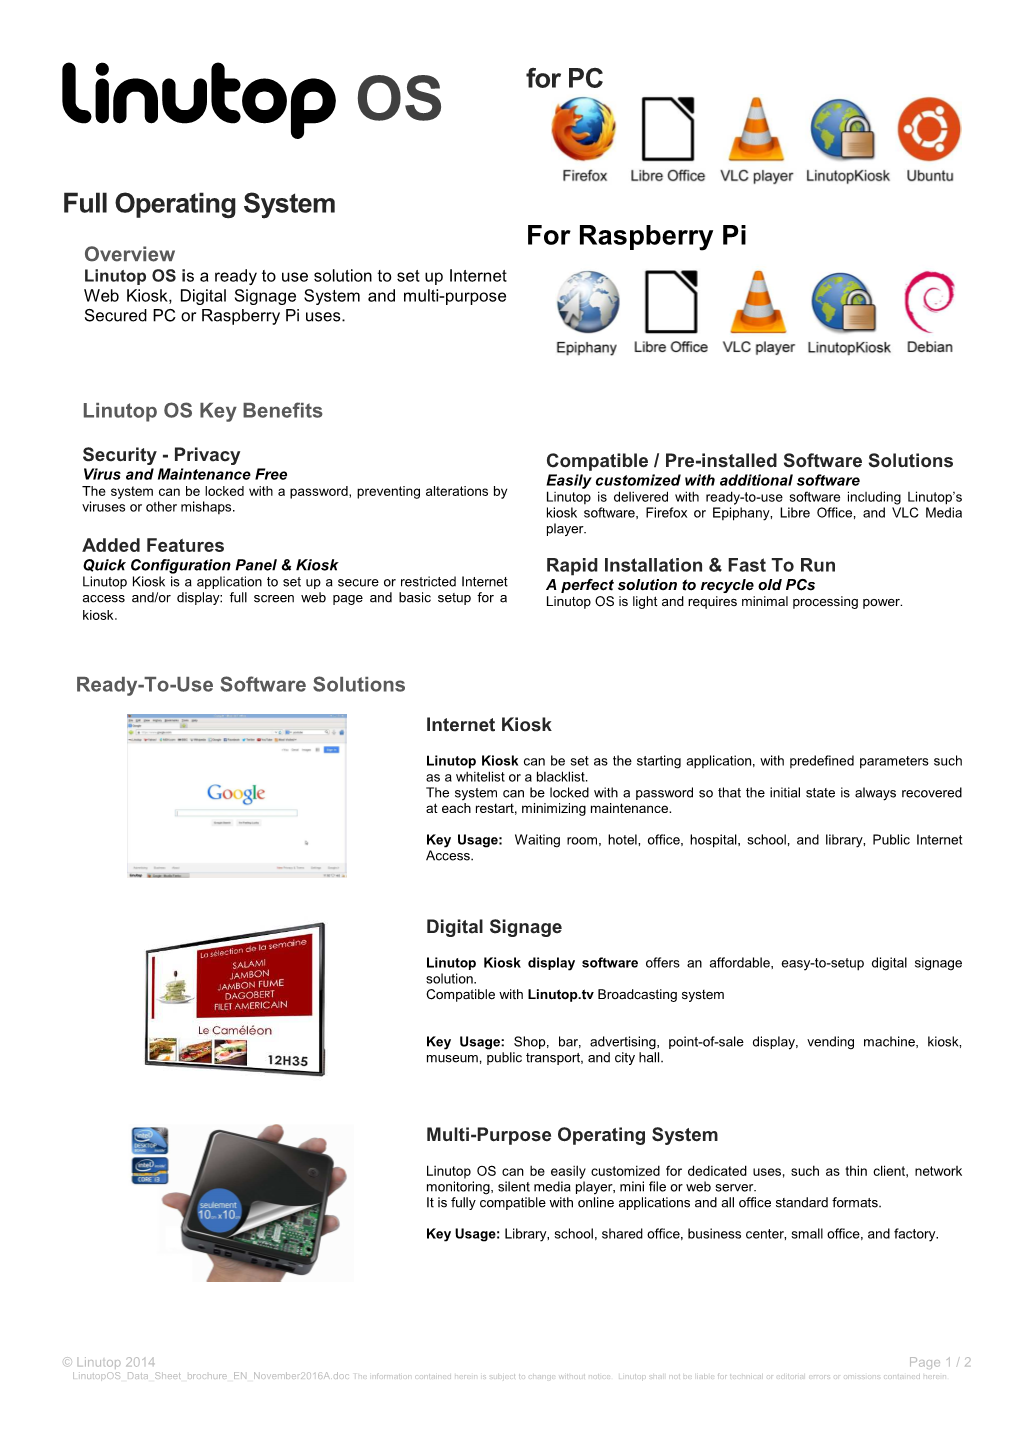 Full Operating System for PC for Raspberry Pi